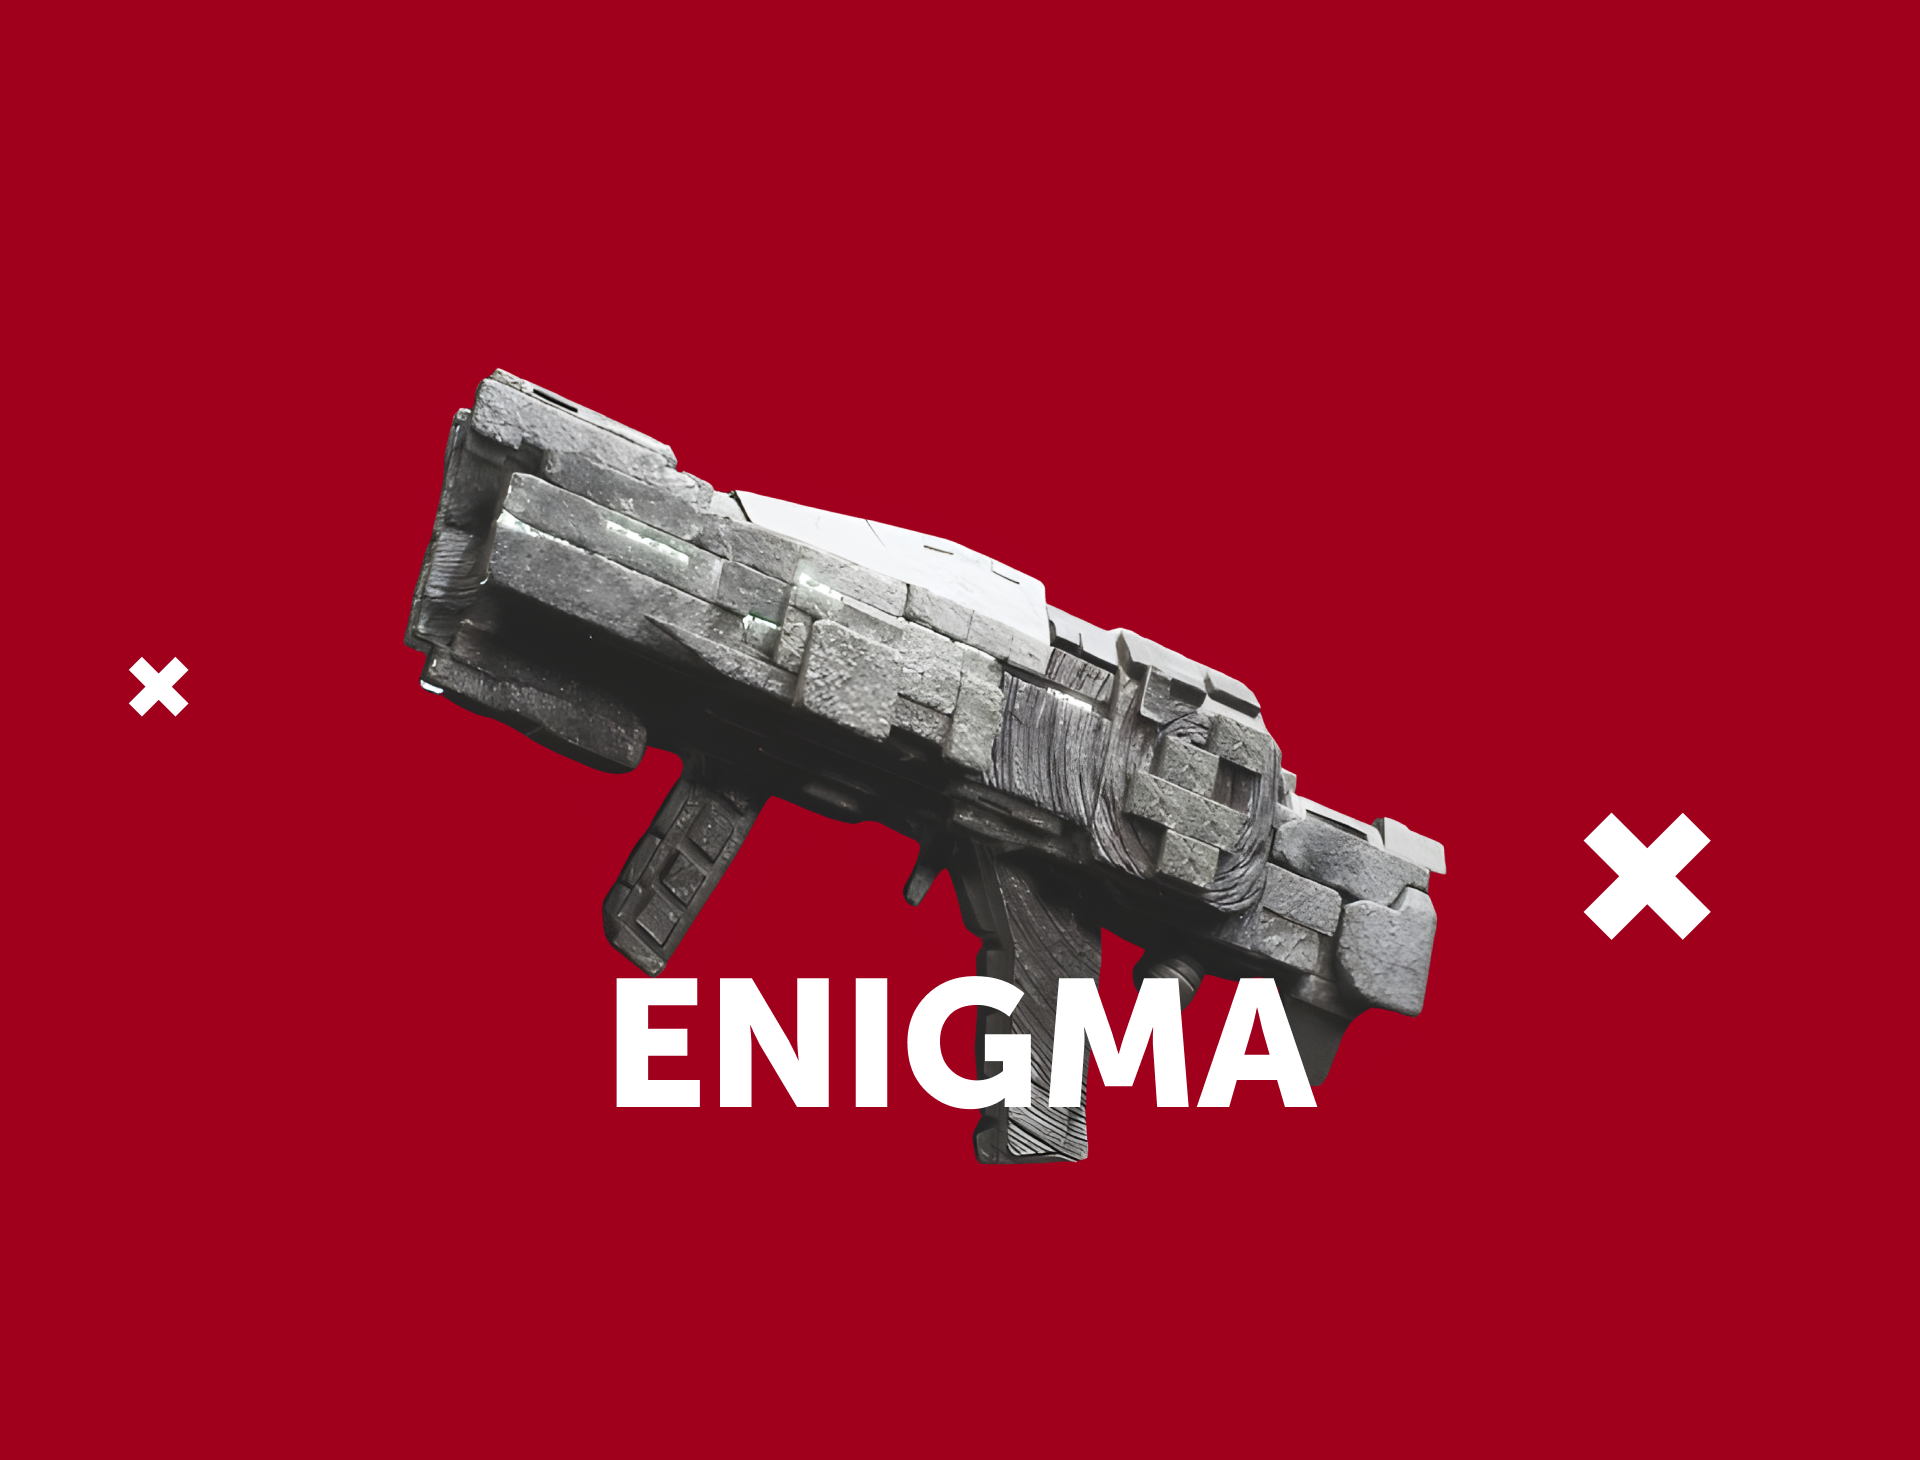 Remnant 2 Enigma Hand Gun Guaranteed